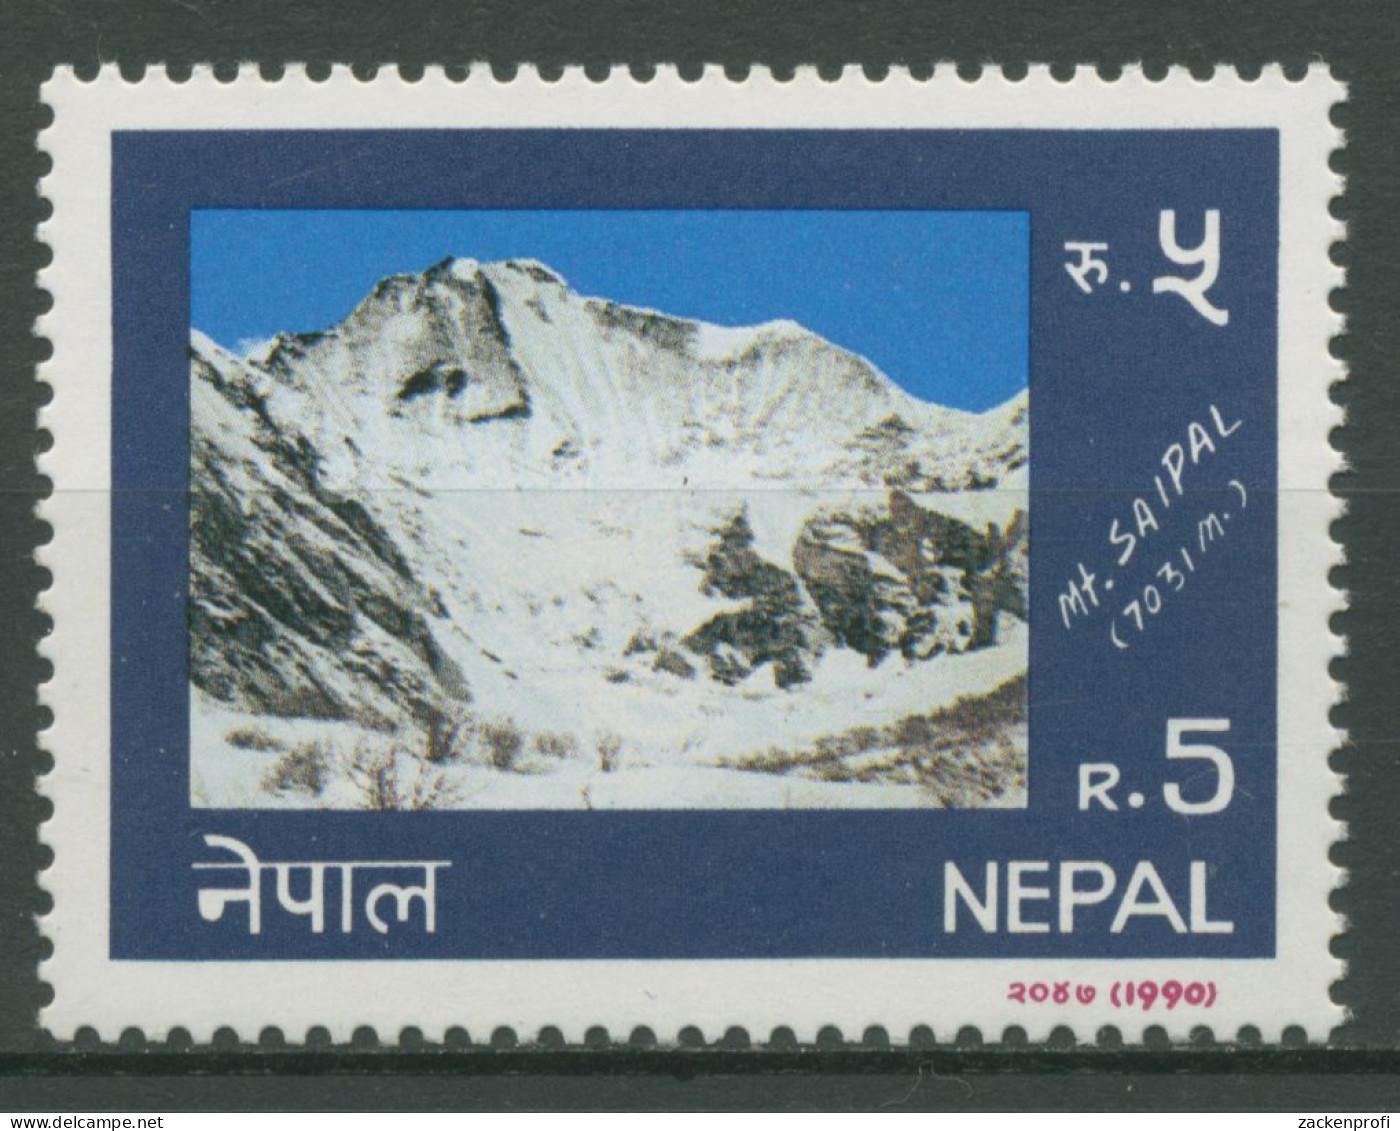 Nepal 1990 Tourismus Berg Saipal 509 Postfrisch - Nepal